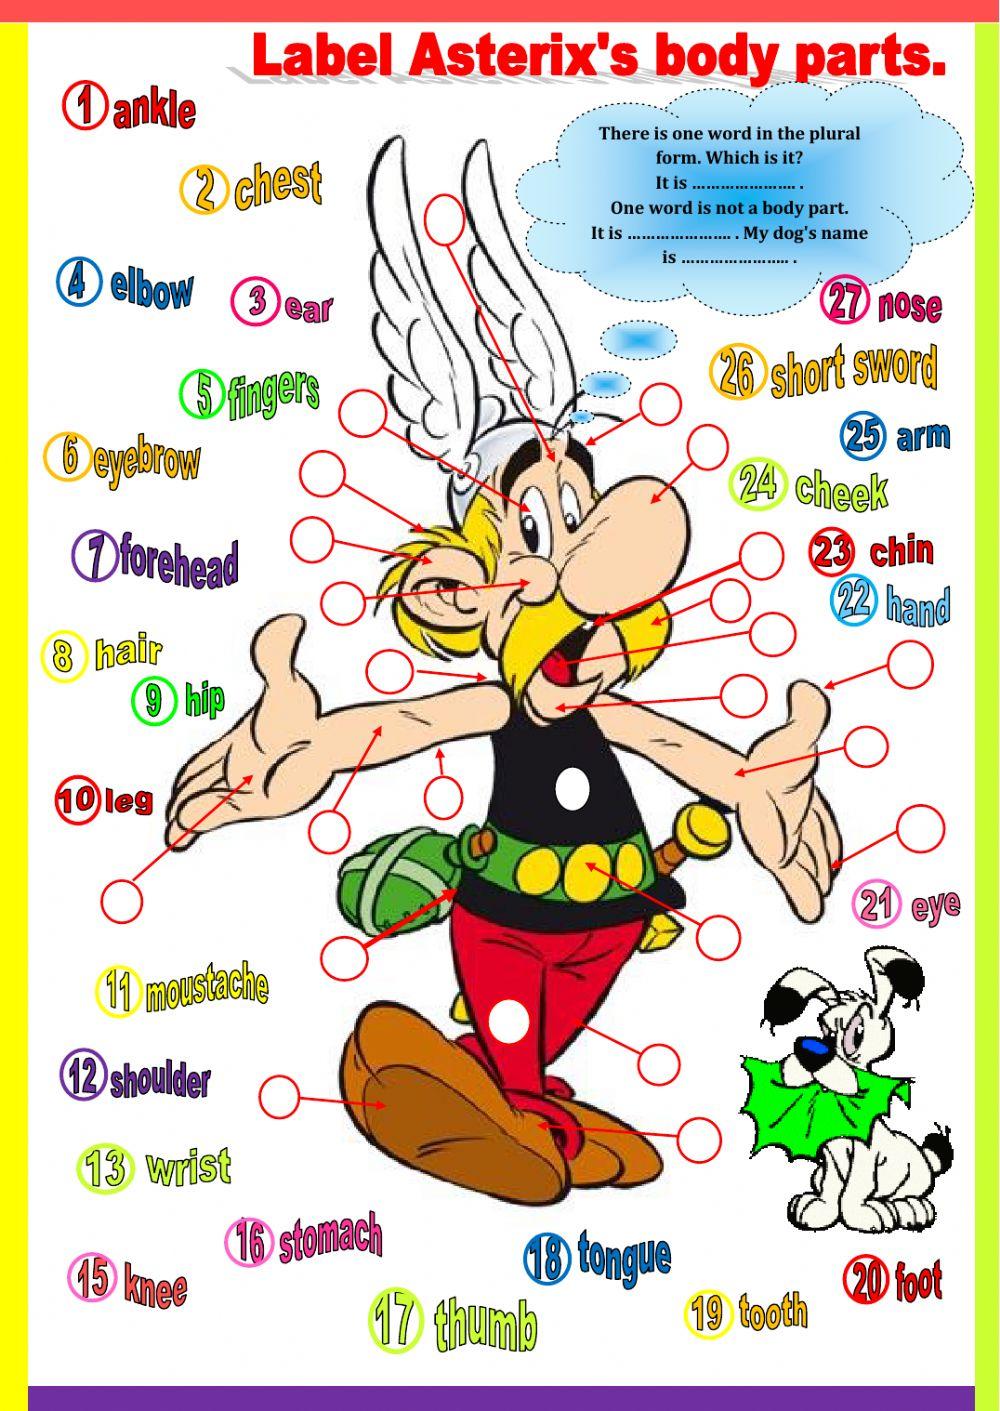 Asterix's body parts